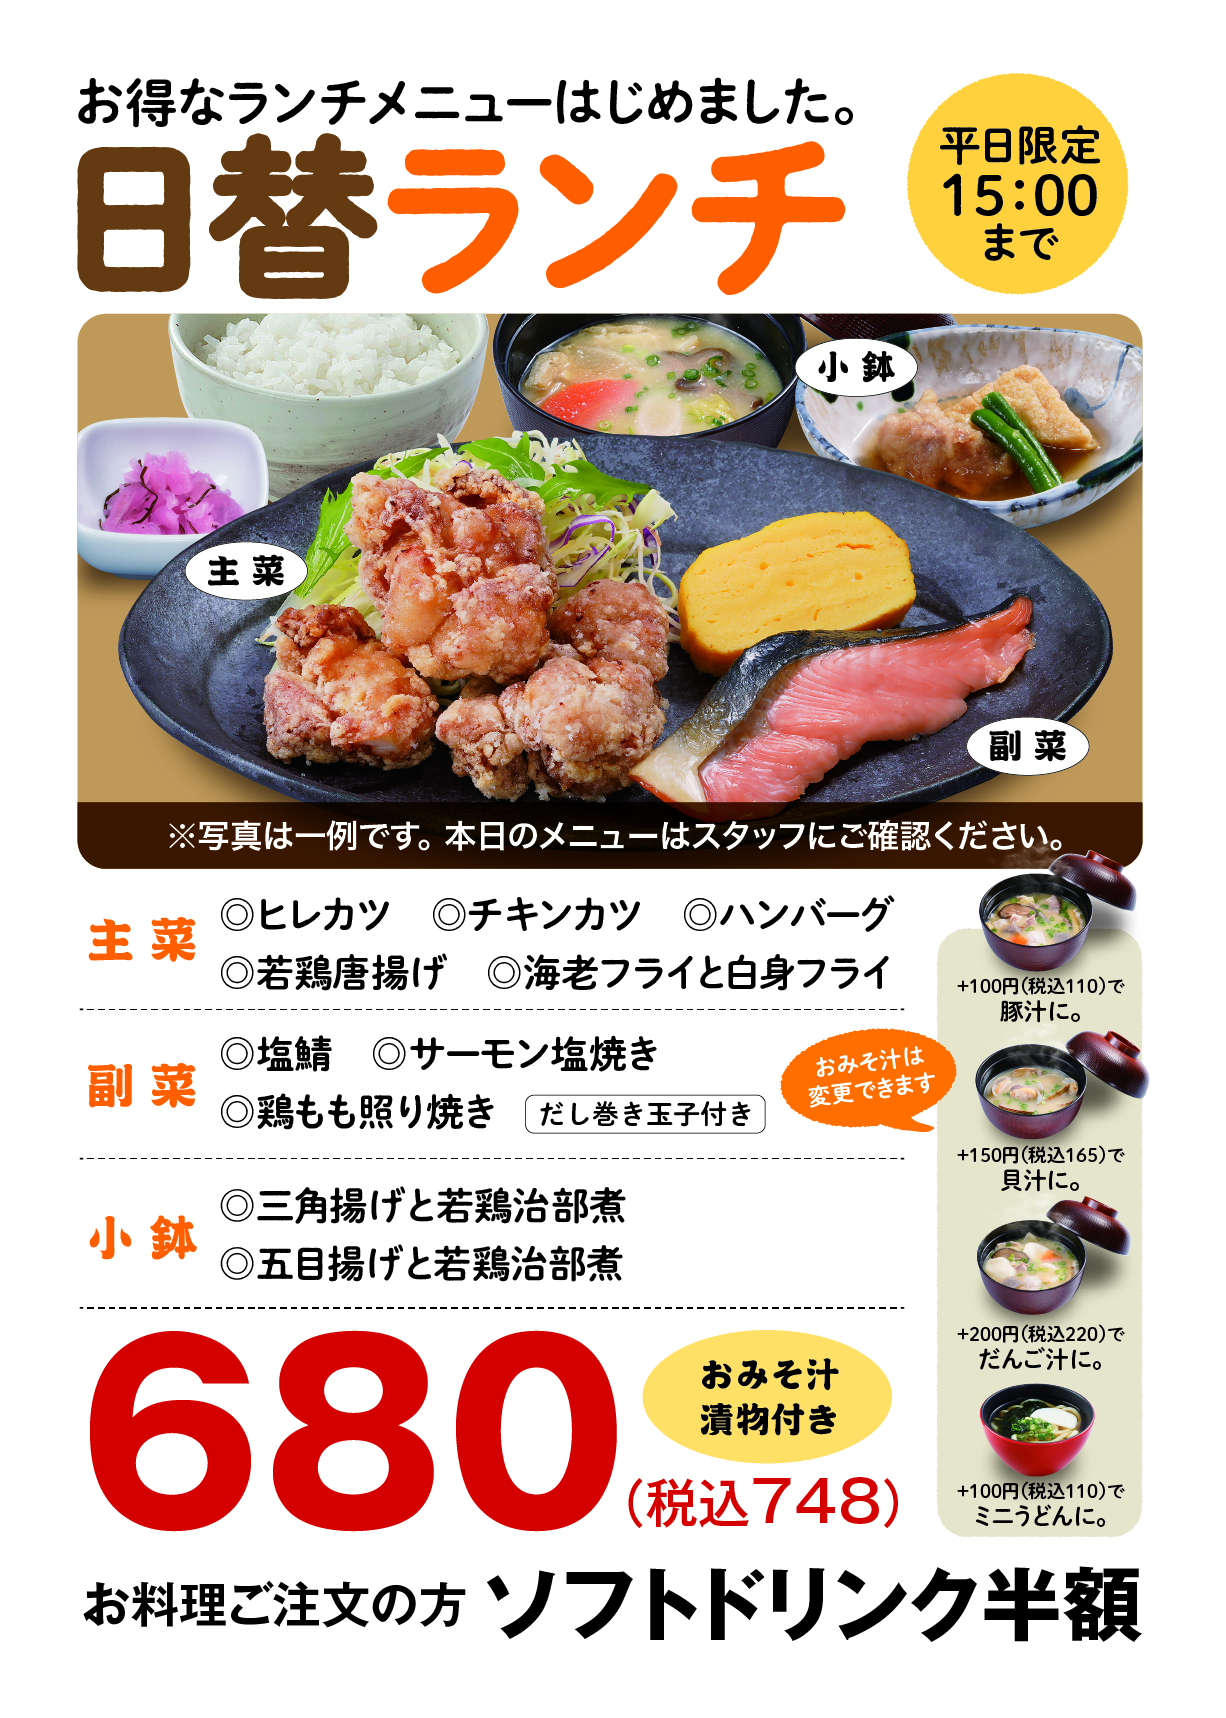 hyakusai_lunch2204.jpg